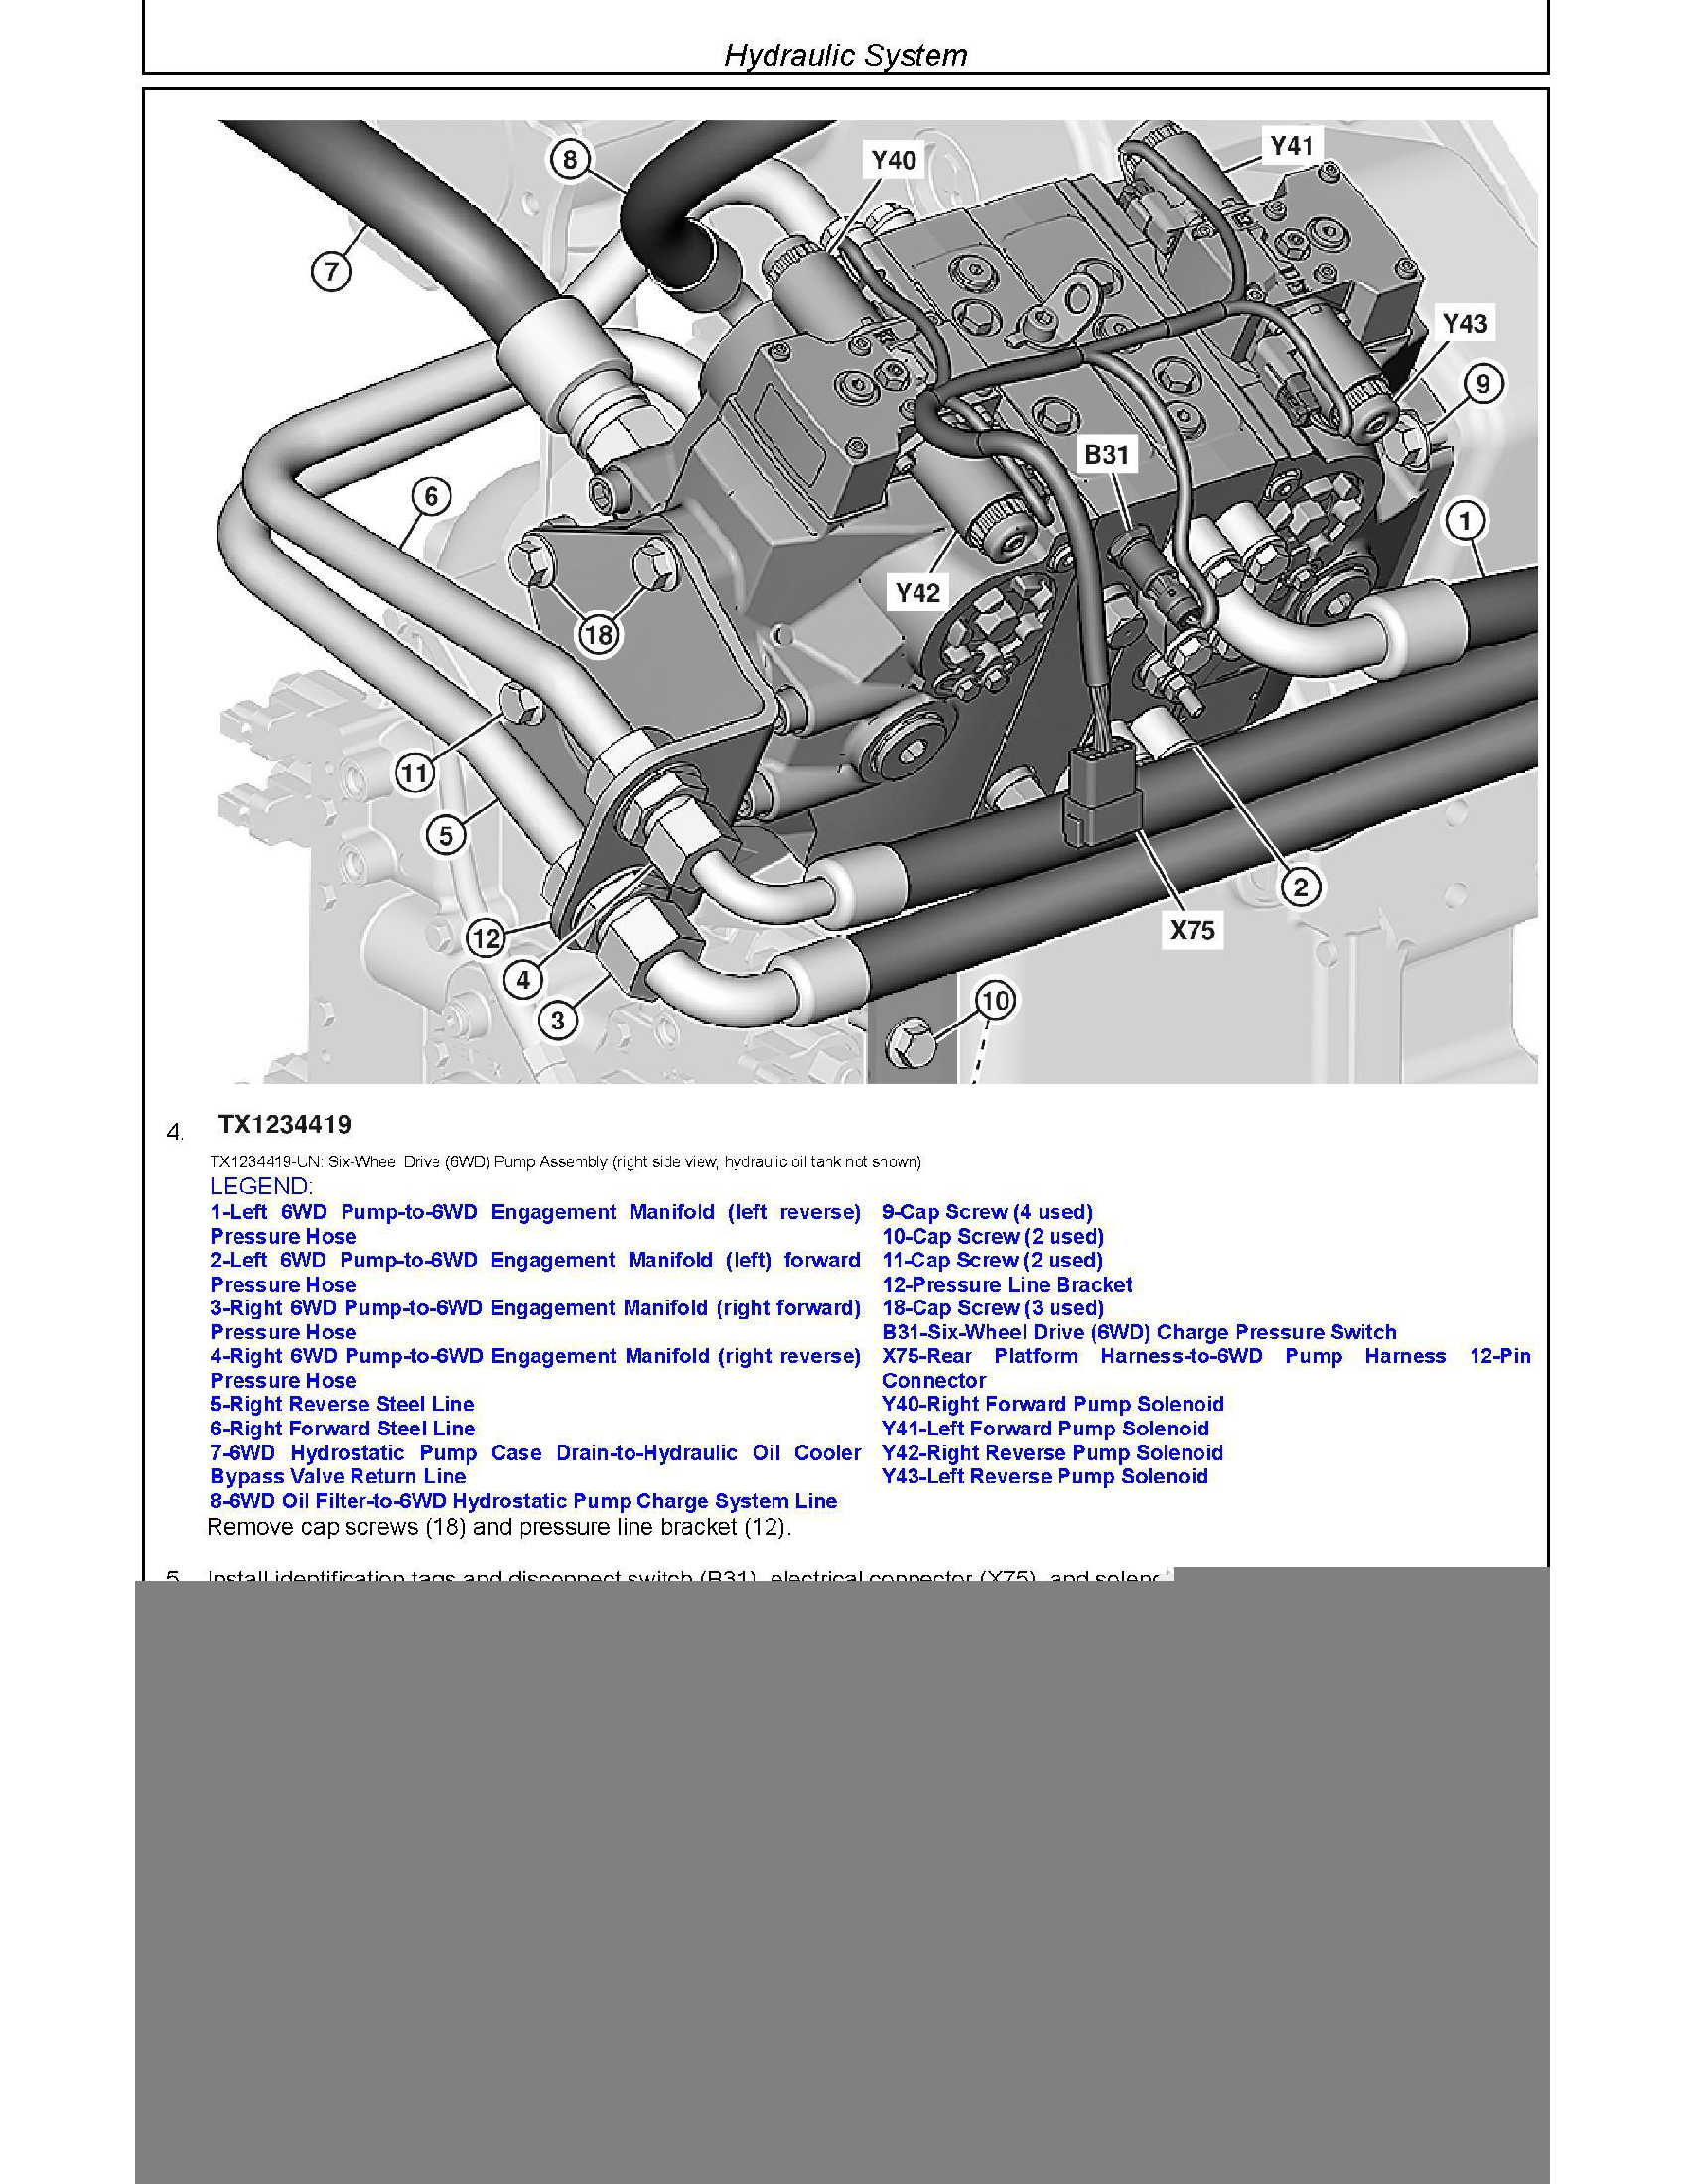 John Deere 2554HV manual pdf